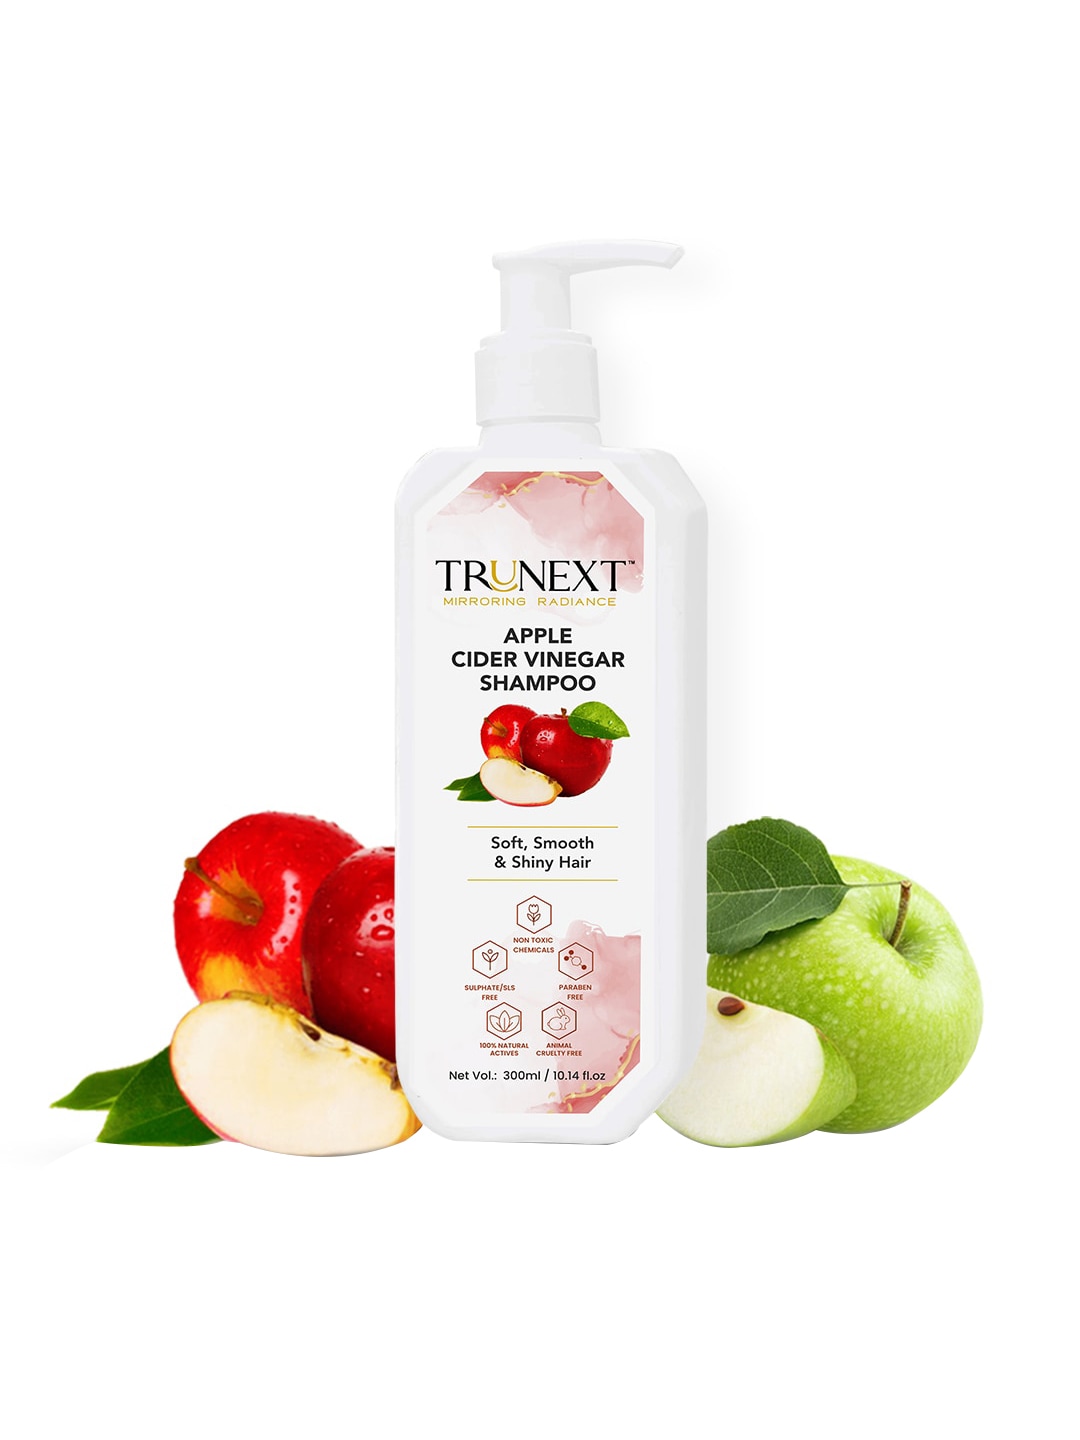 TRUNEXT Apple Cider Vinegar Shampoo 300 ml Price in India